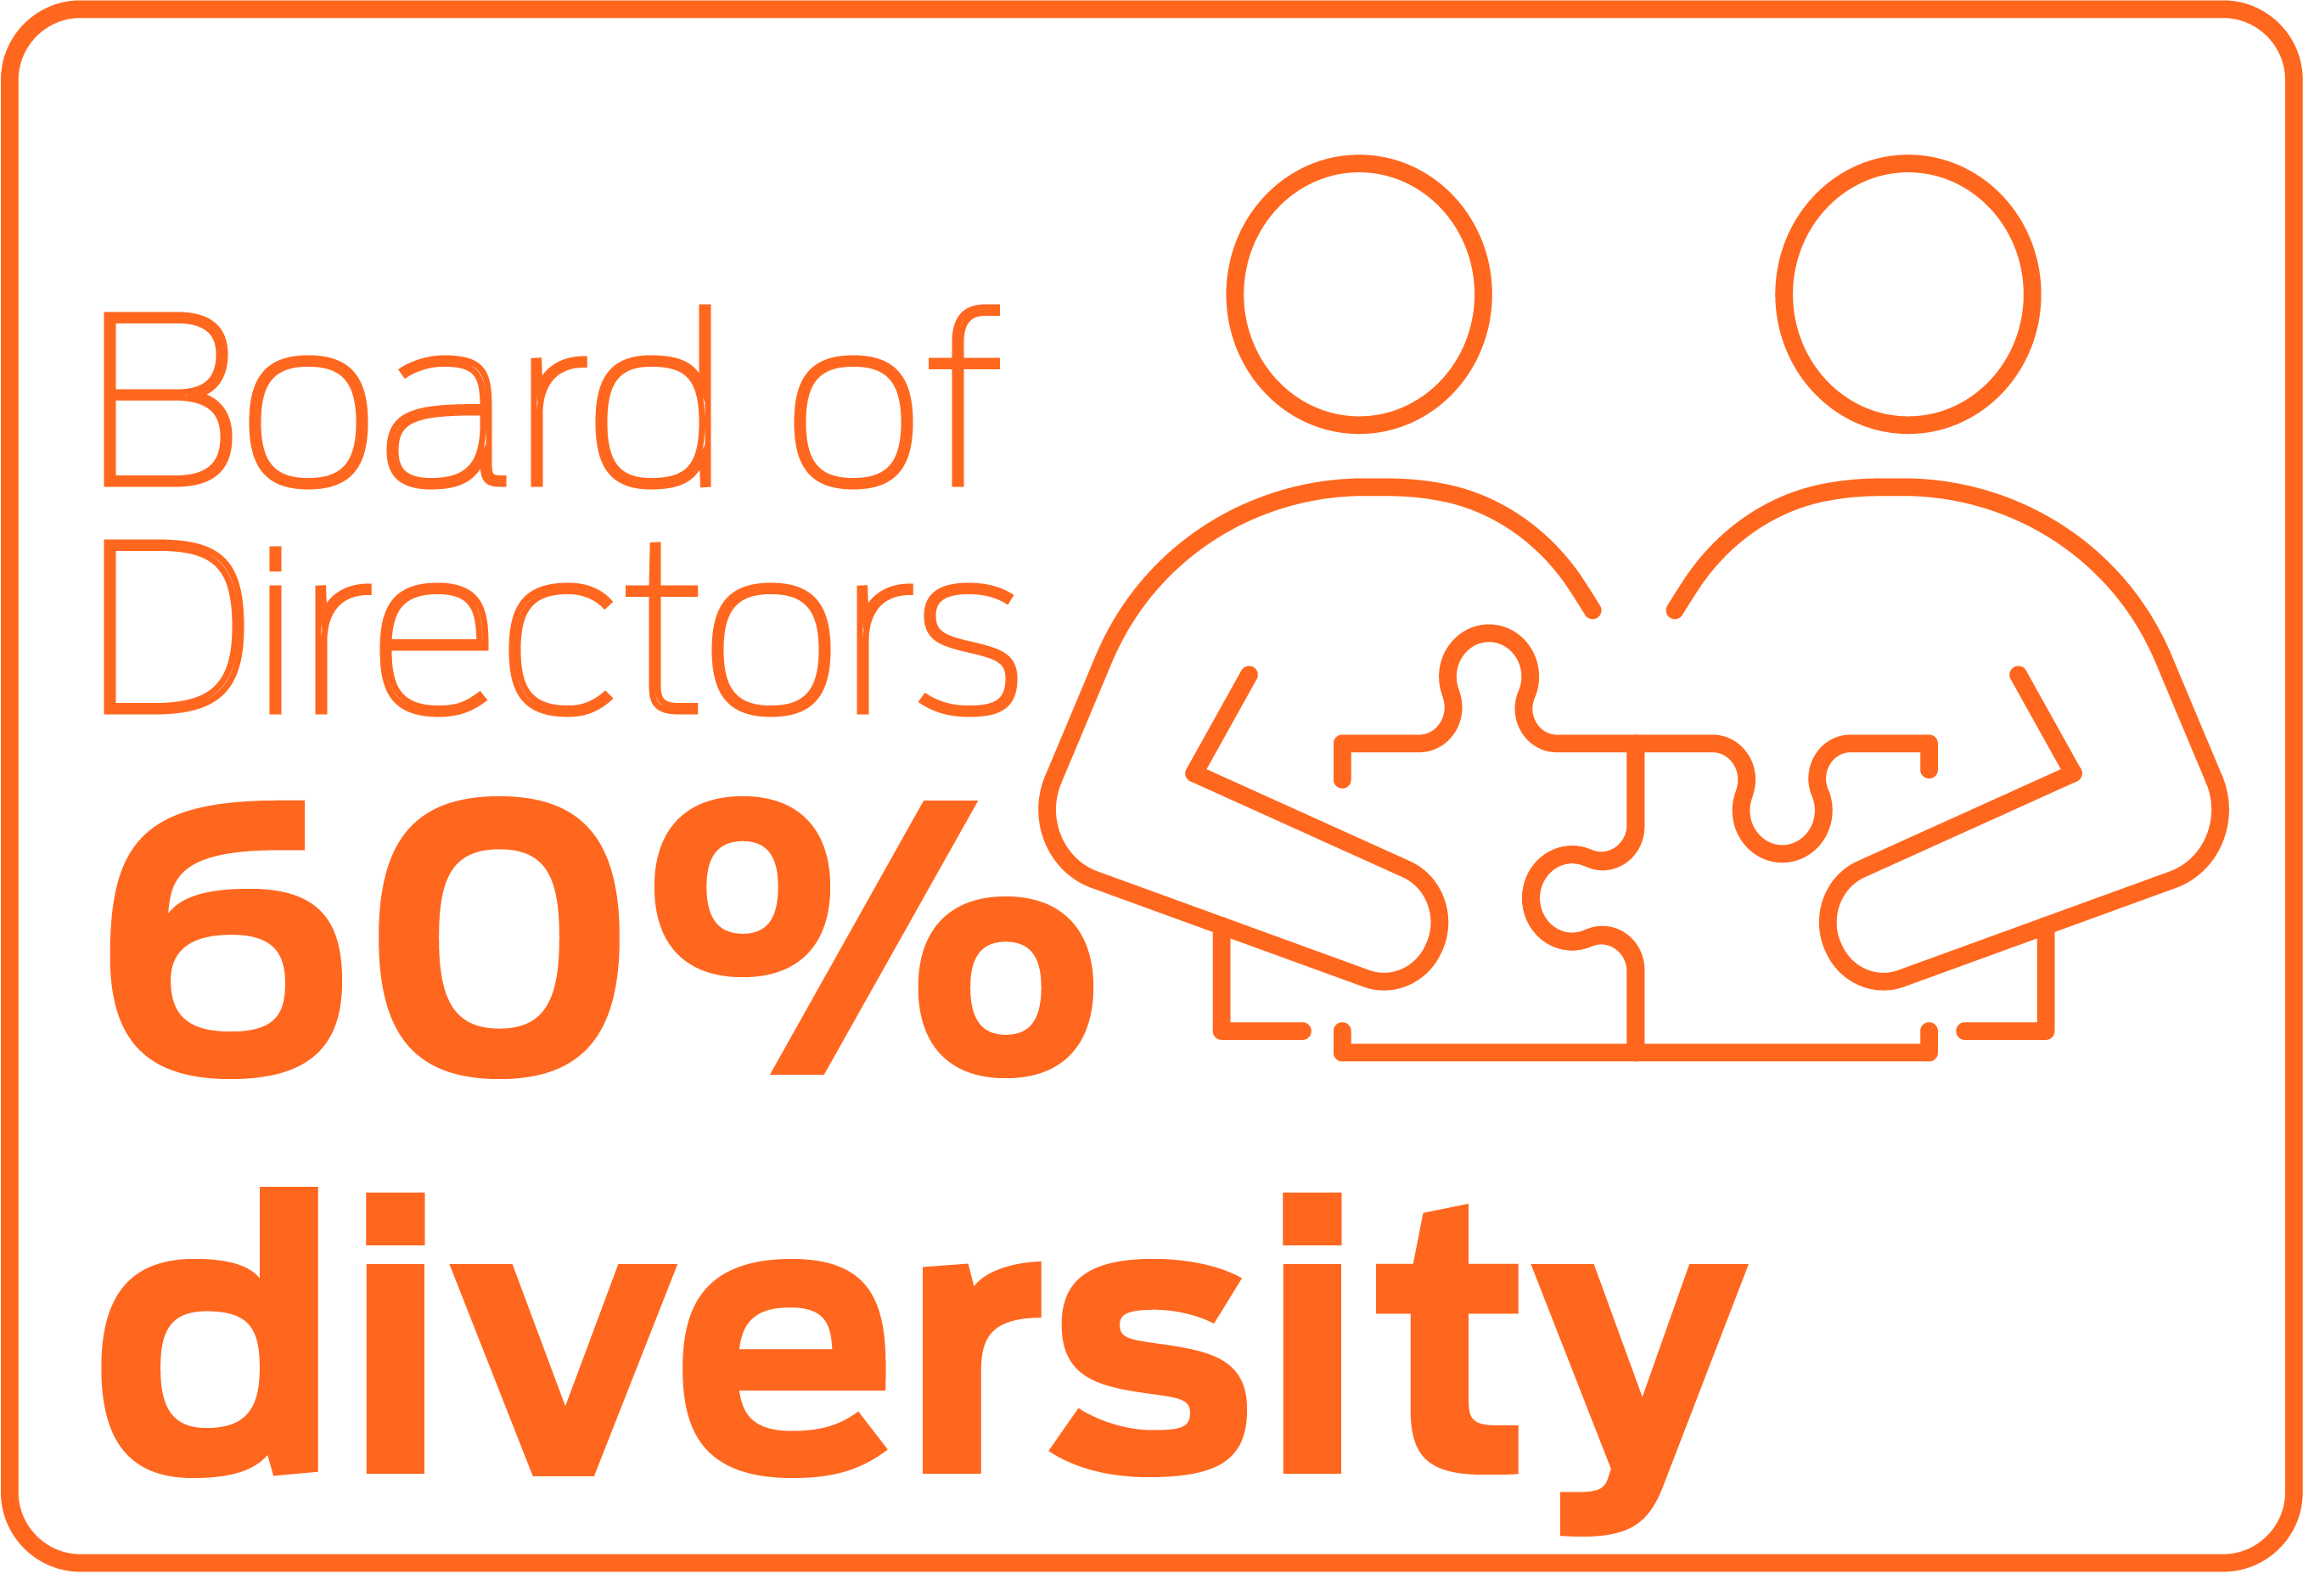 Board of Directors 60% diversity